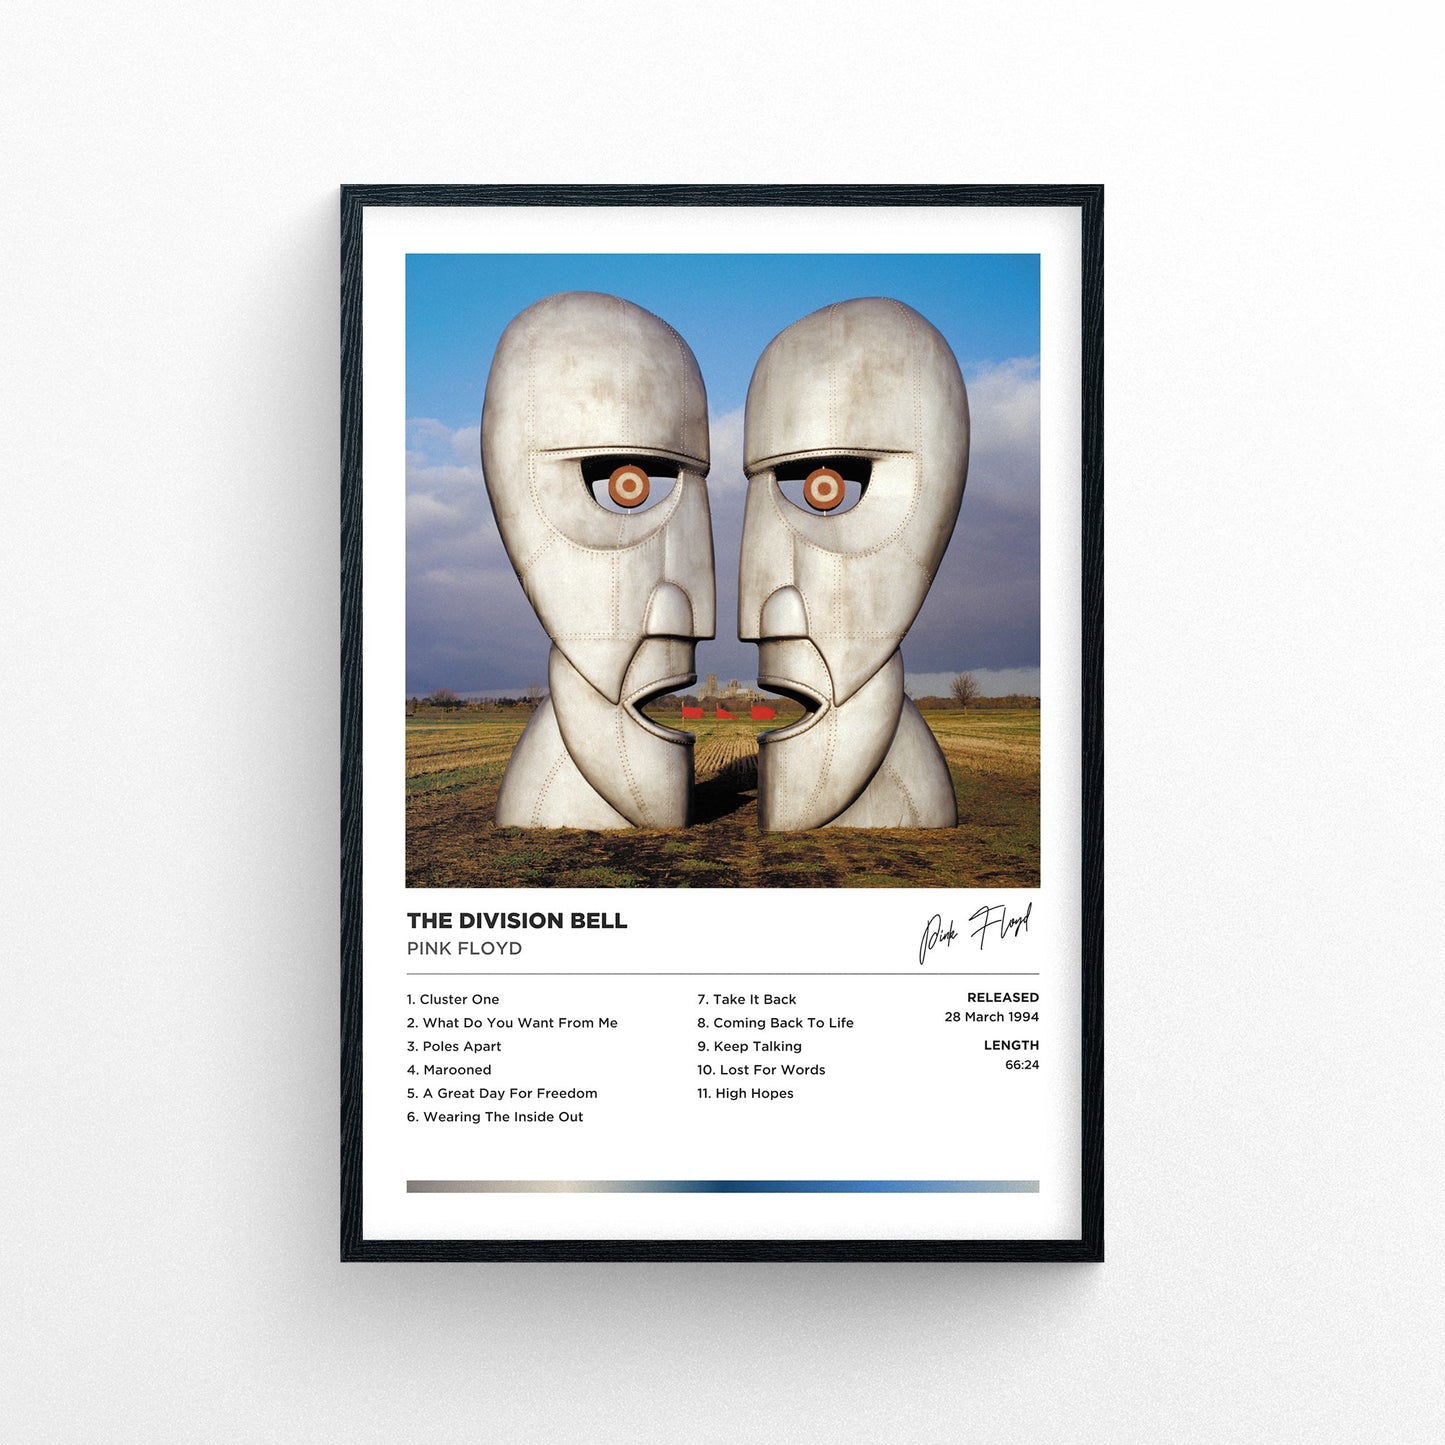 Pink Floyd - The Division Bell Framed Poster Print | Polaroid Style | Album Cover Artwork